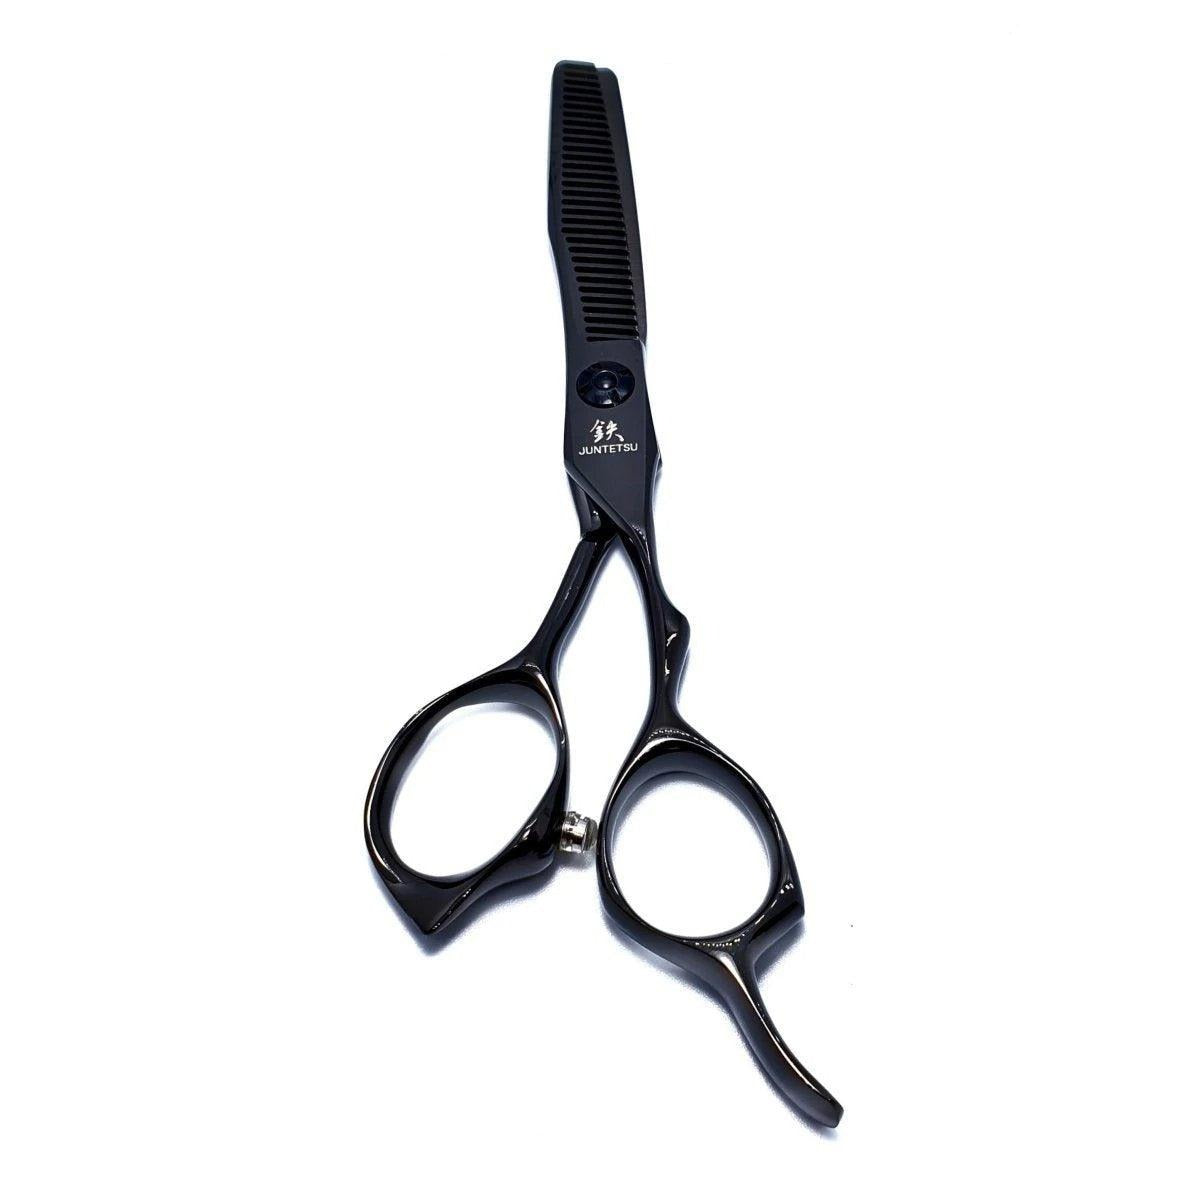 Juntetsu Cobalt Sword Hair Cutting Scissors - Japan Scissors USA